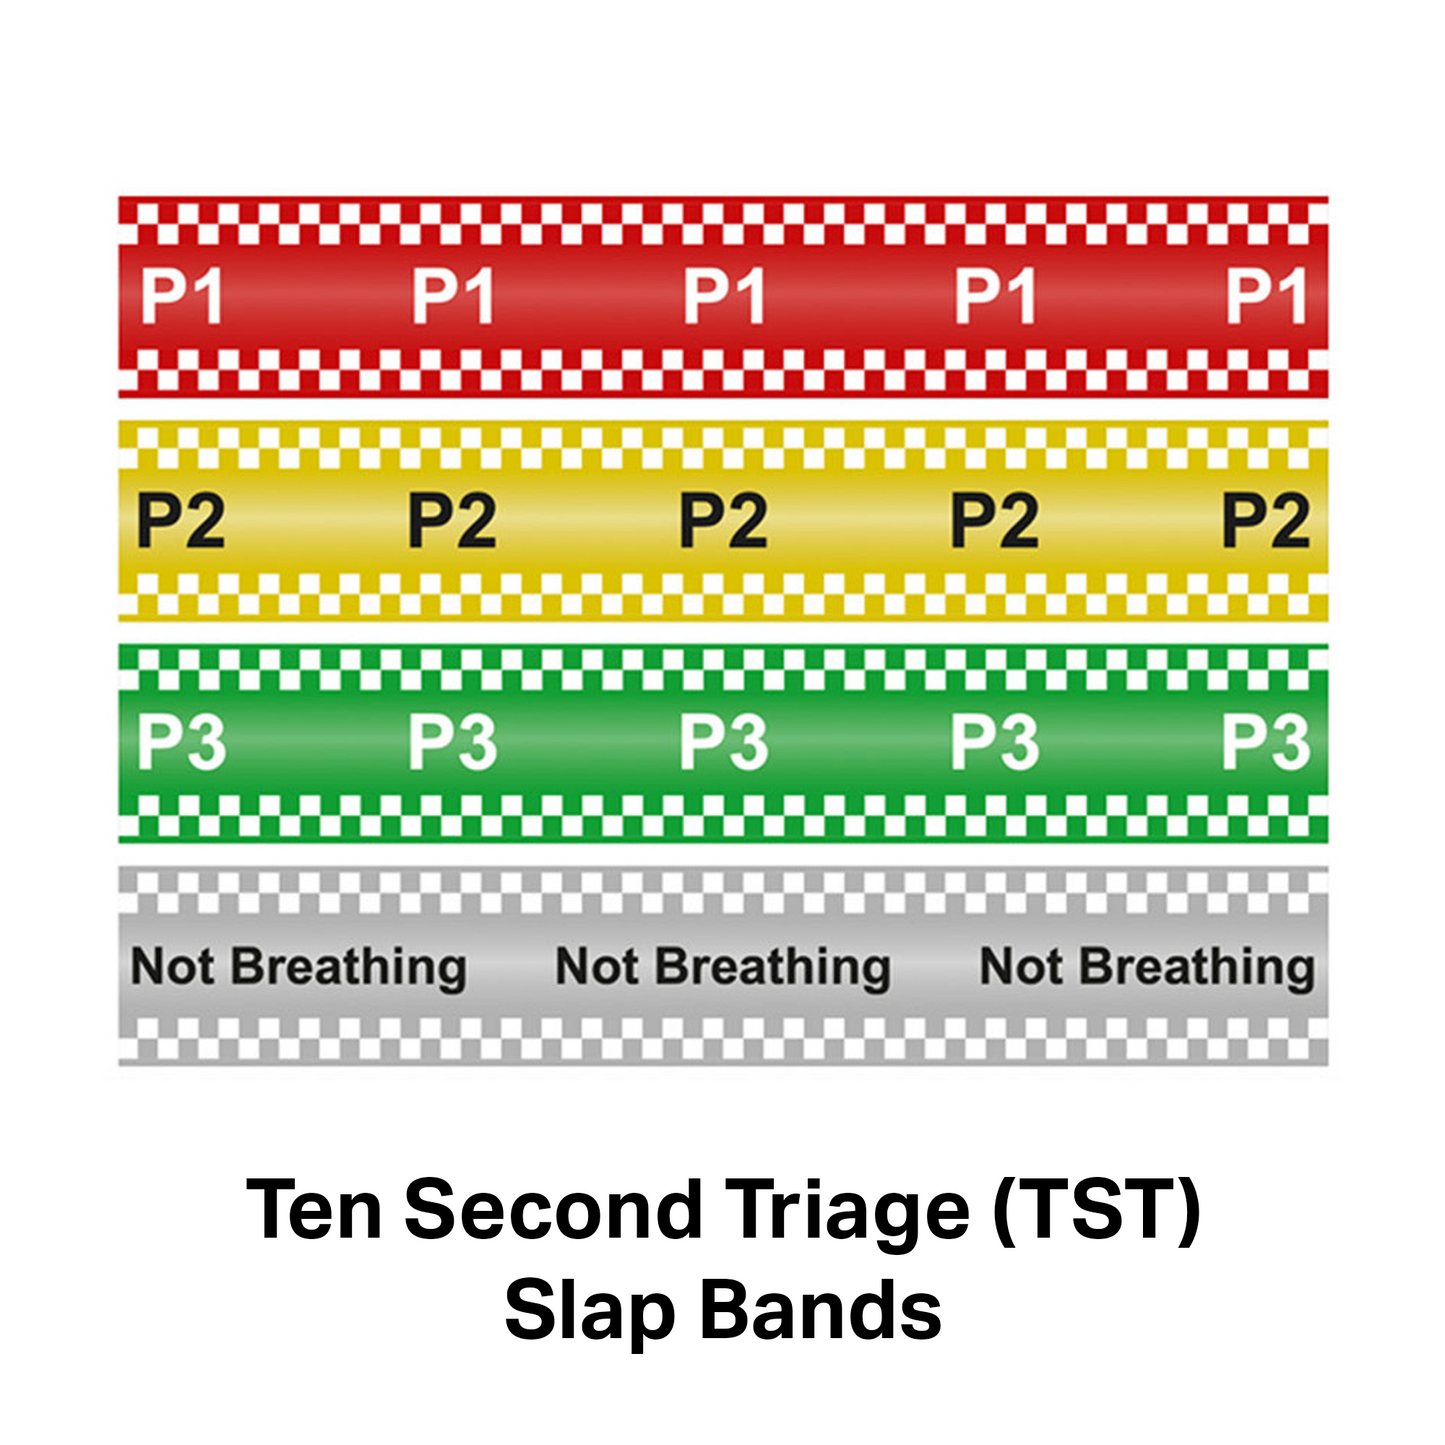 NHS Ten Second Triage (TST) Slap Band - P1 Red